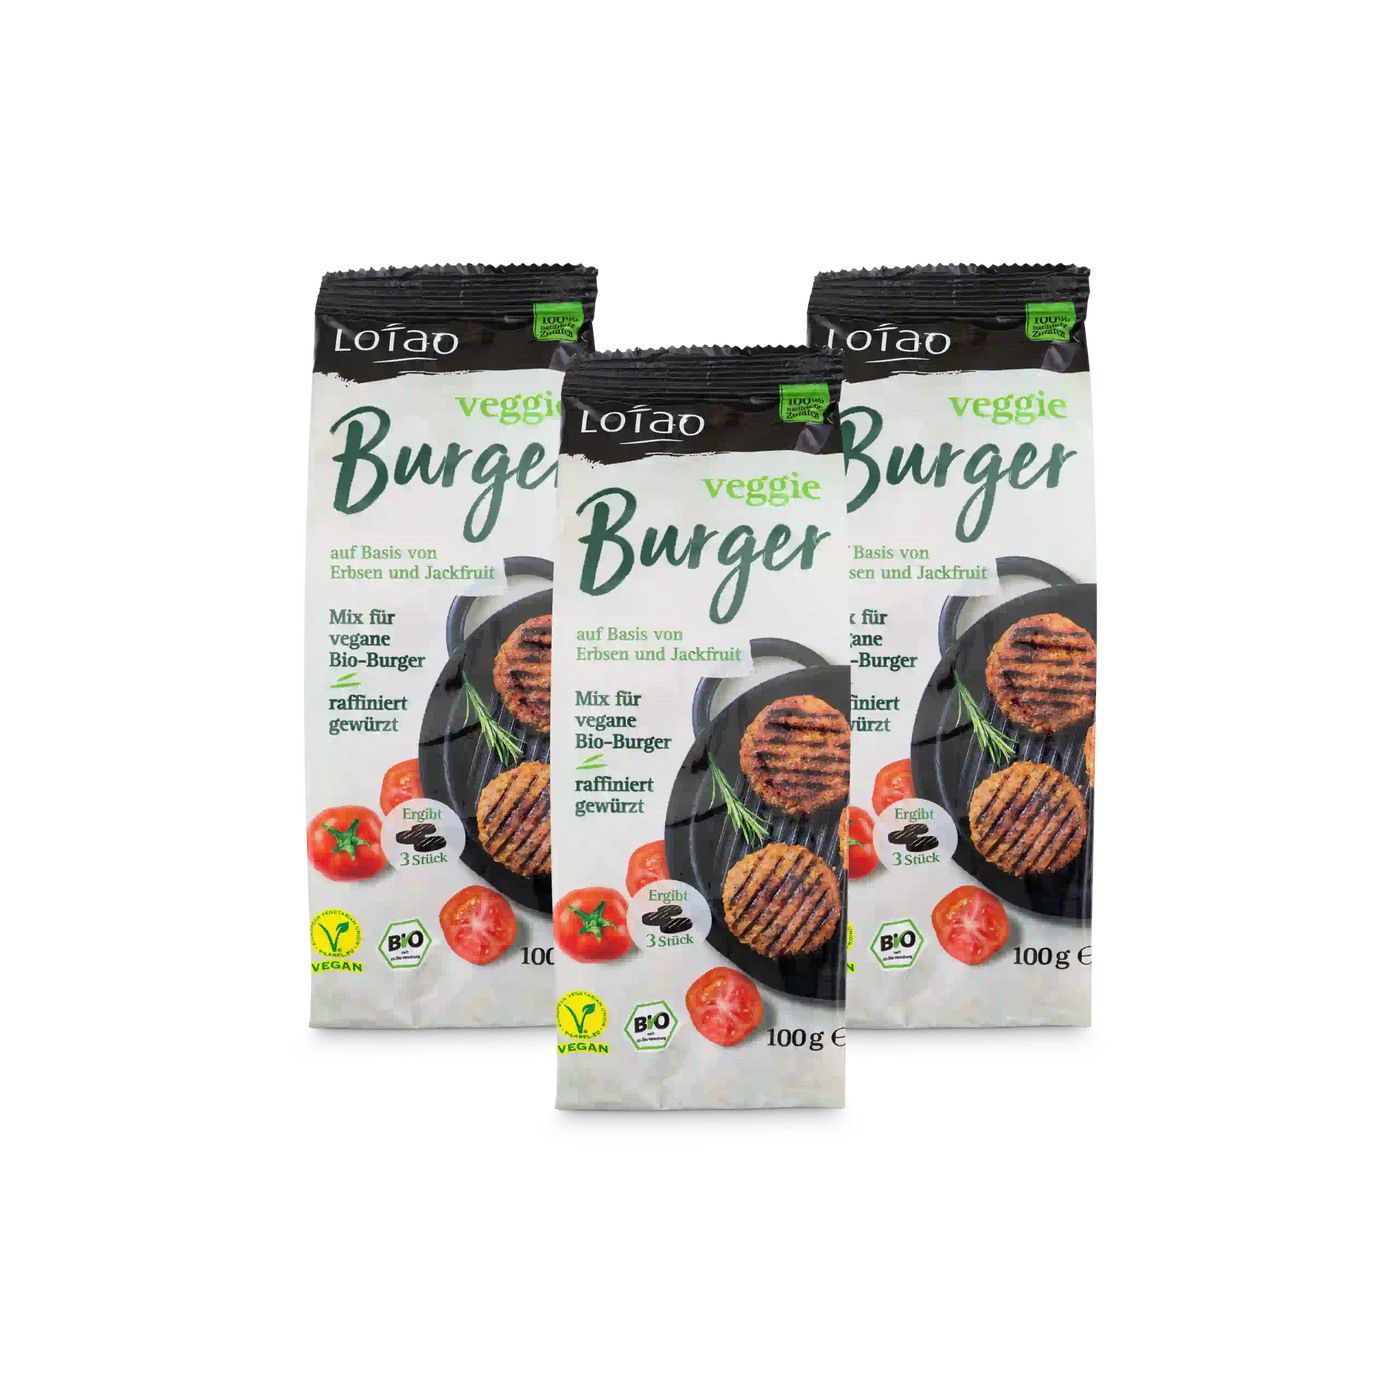 Lotao Veggie Burger Mix für vegane Bio-Burger, Packshot 3er Set